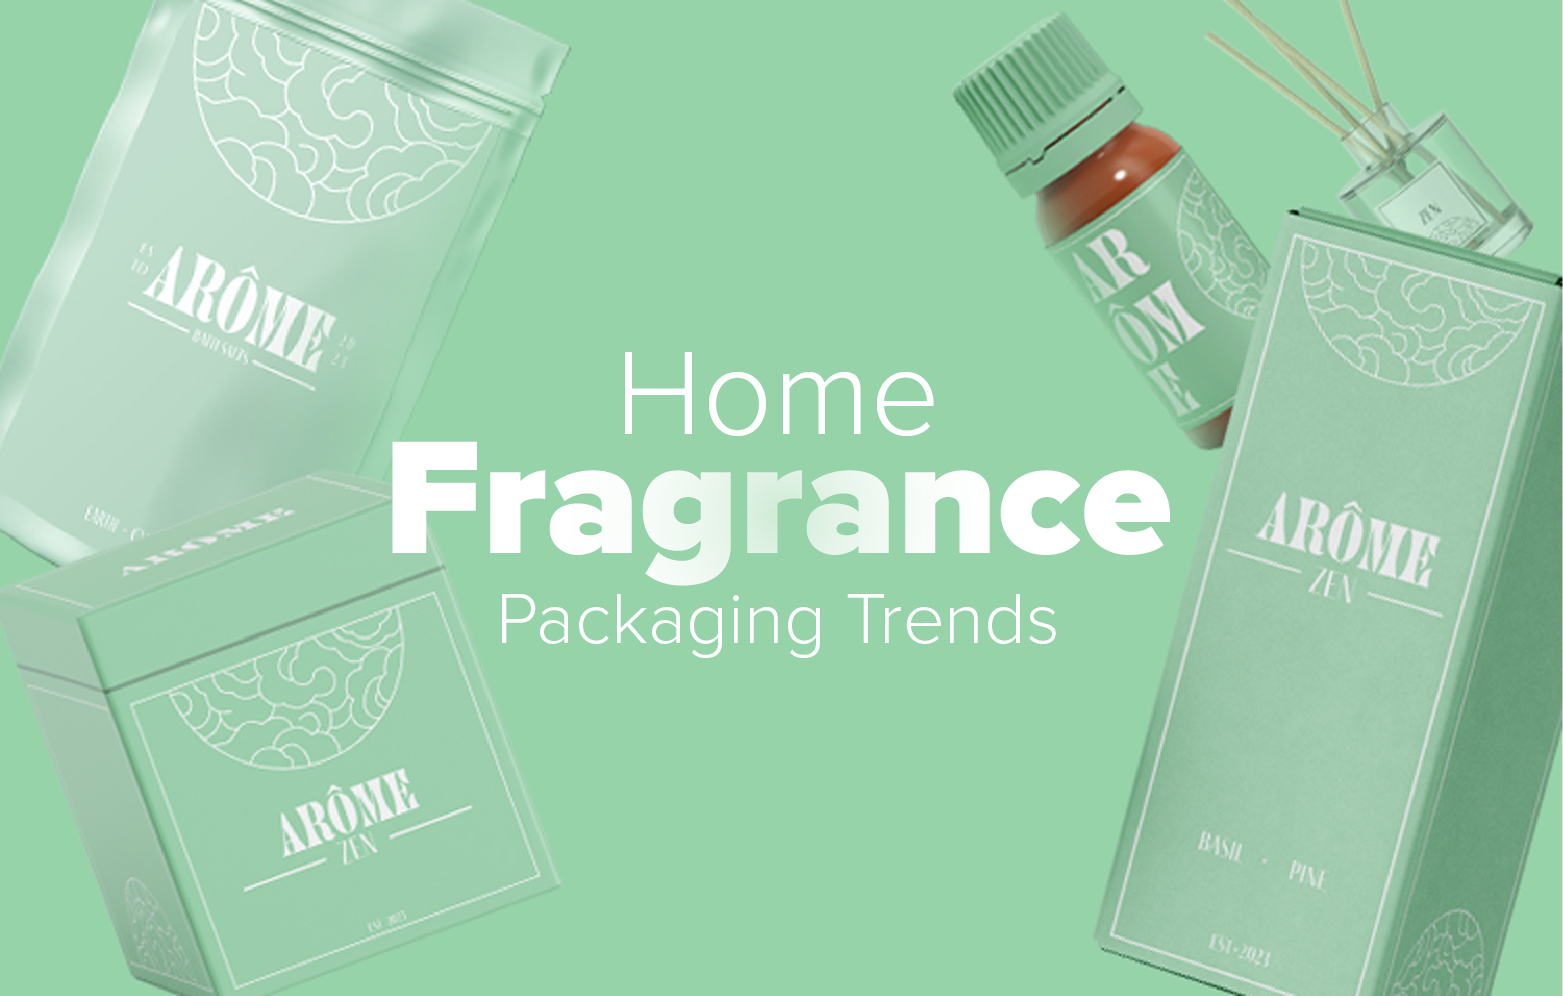 Home Fragrance Packaging